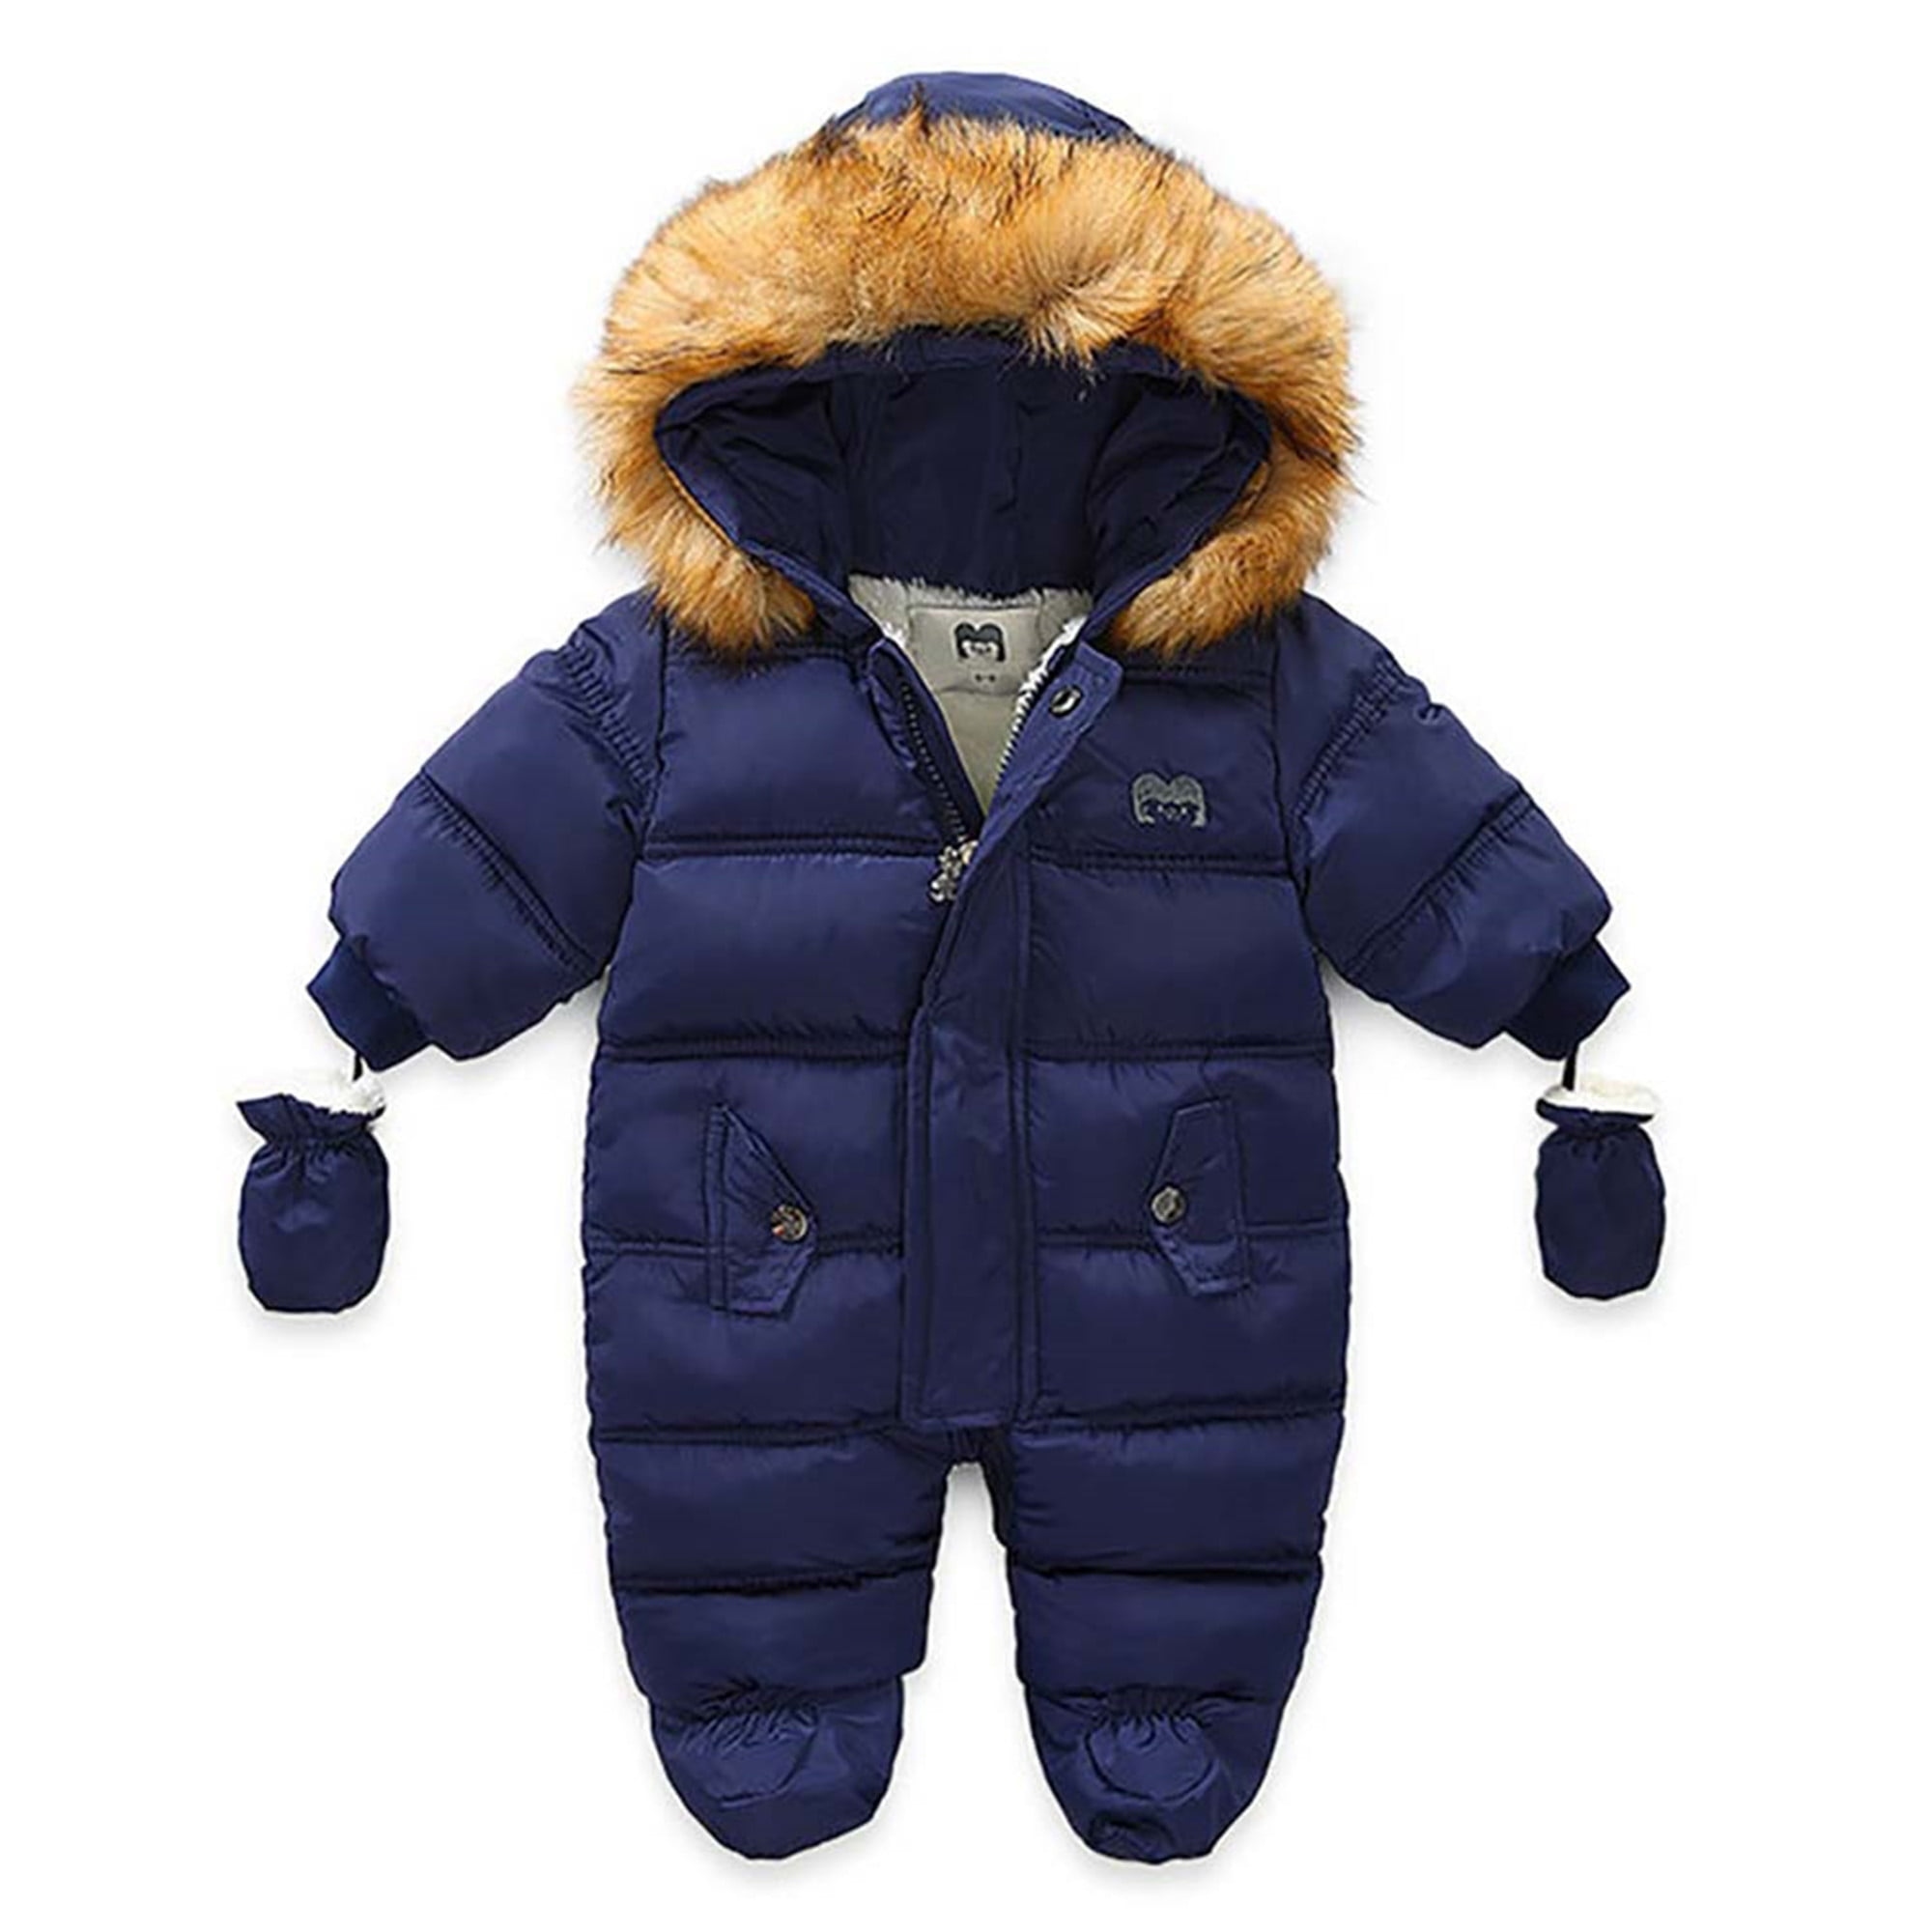 Toddler Baby Kid Girl Boy Winter Warm Cotton-padded Jacket Coat Snowsuit Outwear